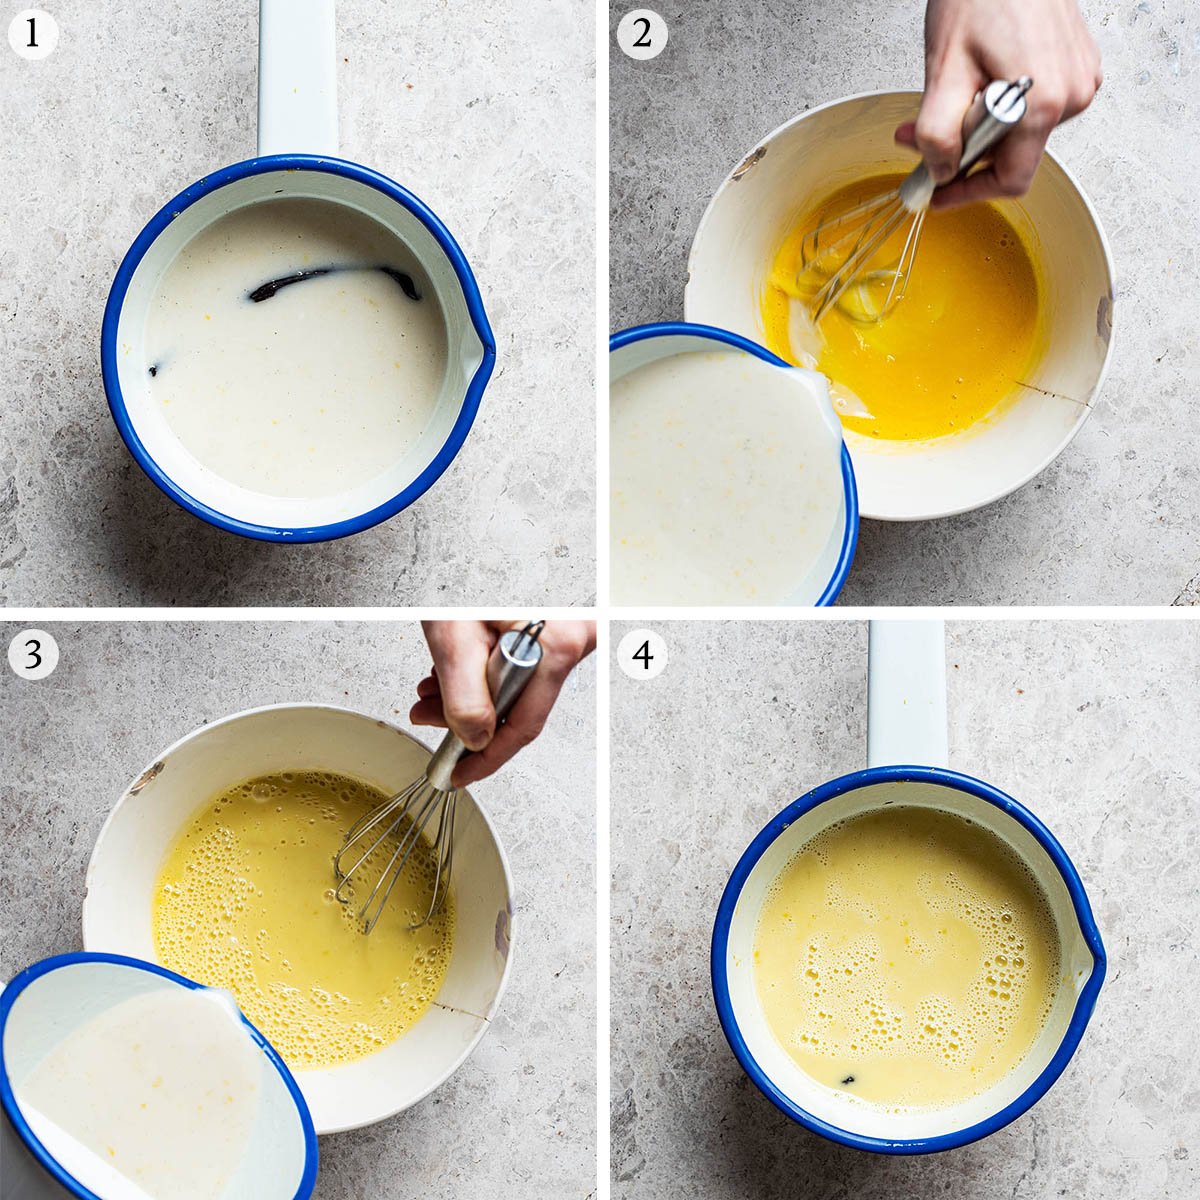 Lemon ice cream steps 1 to 4.